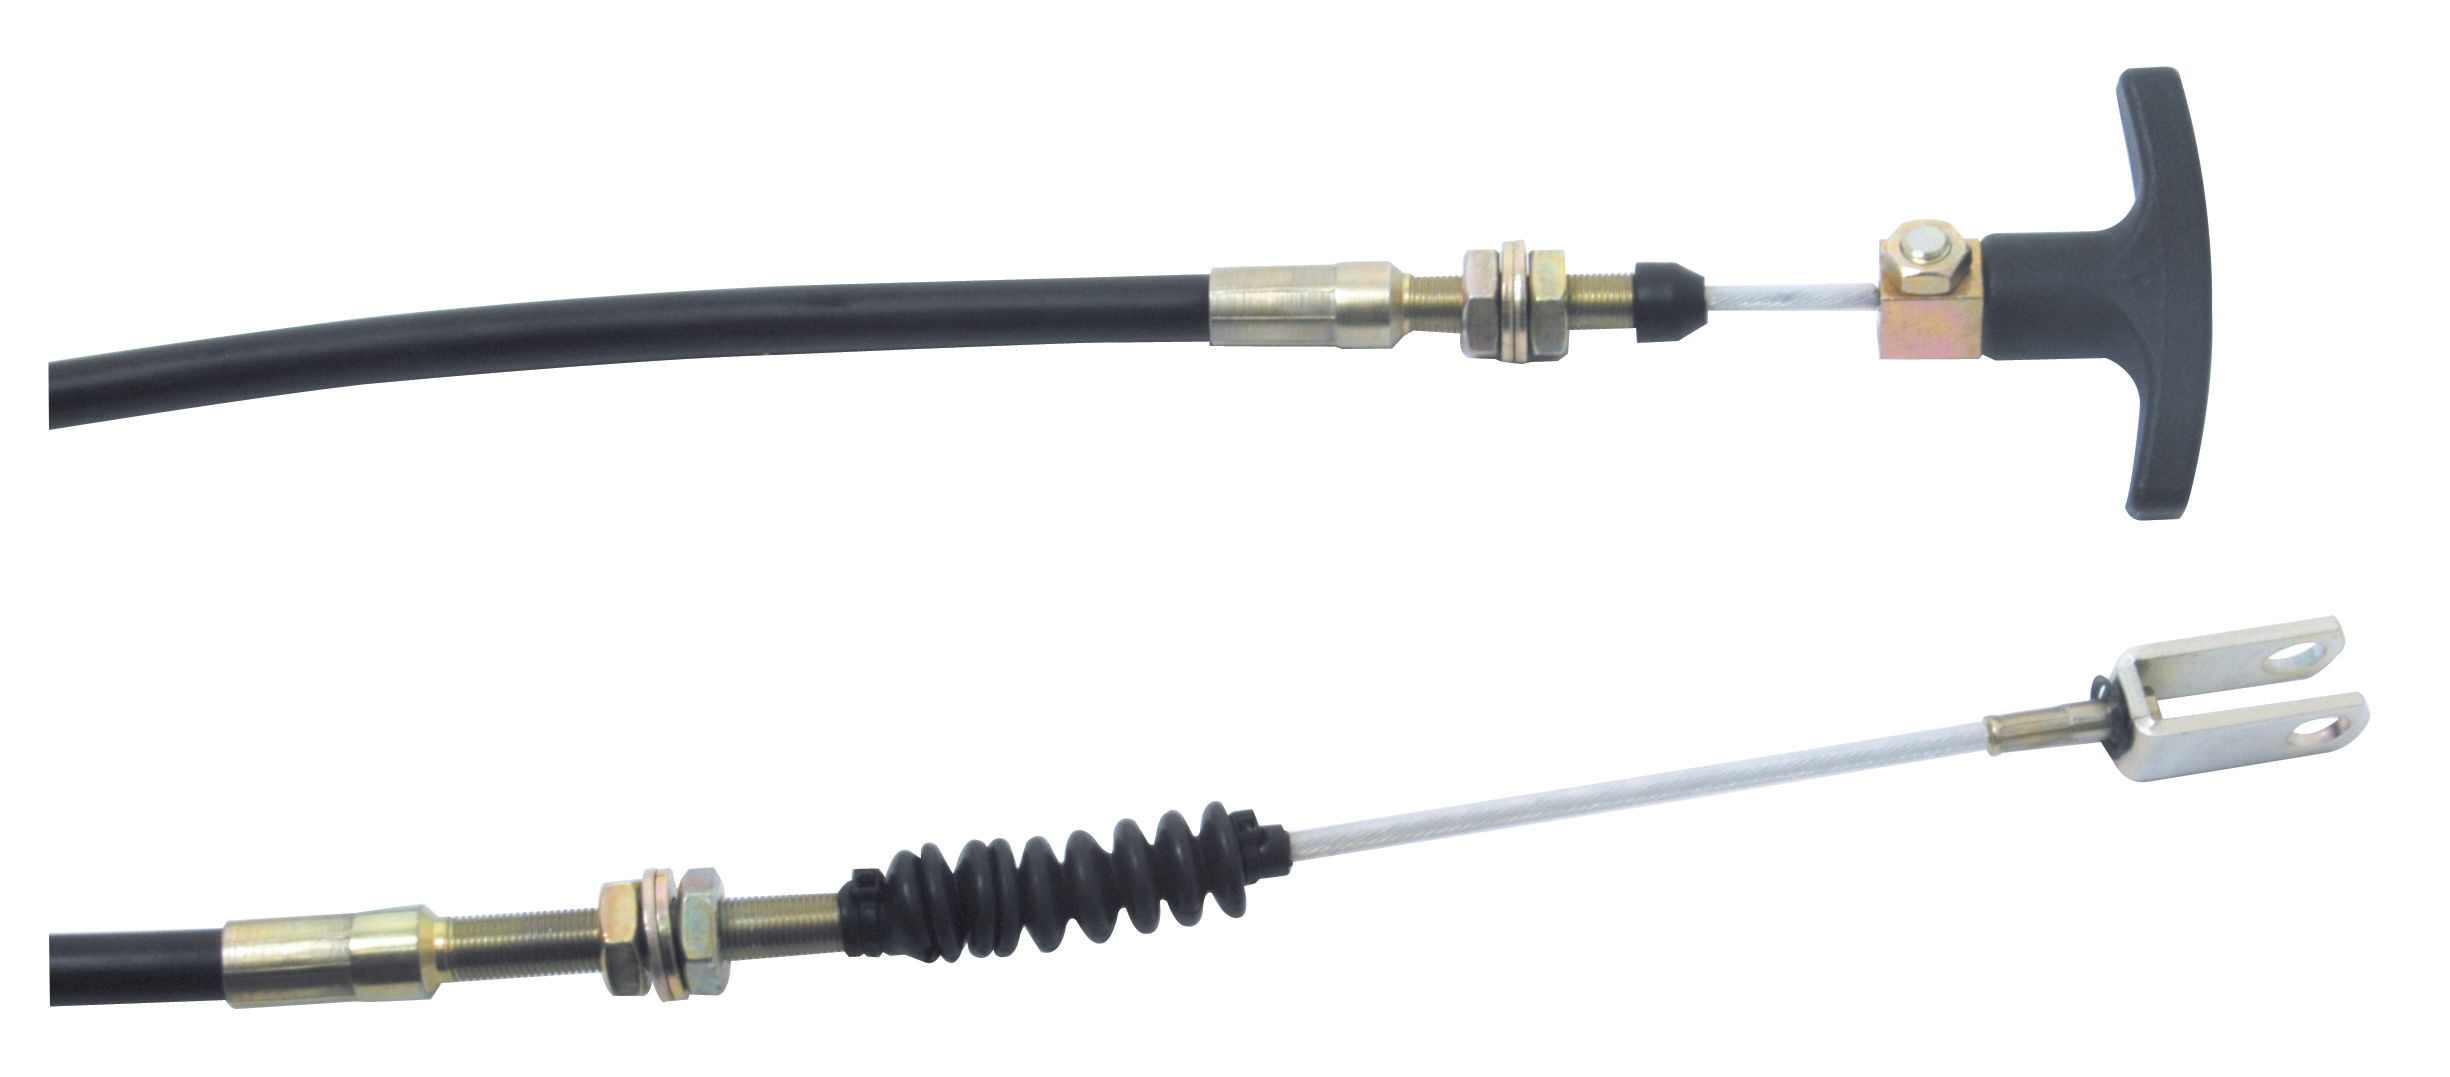 Câble déverrouillage crochet attelage Case IH 281261A1 adaptable